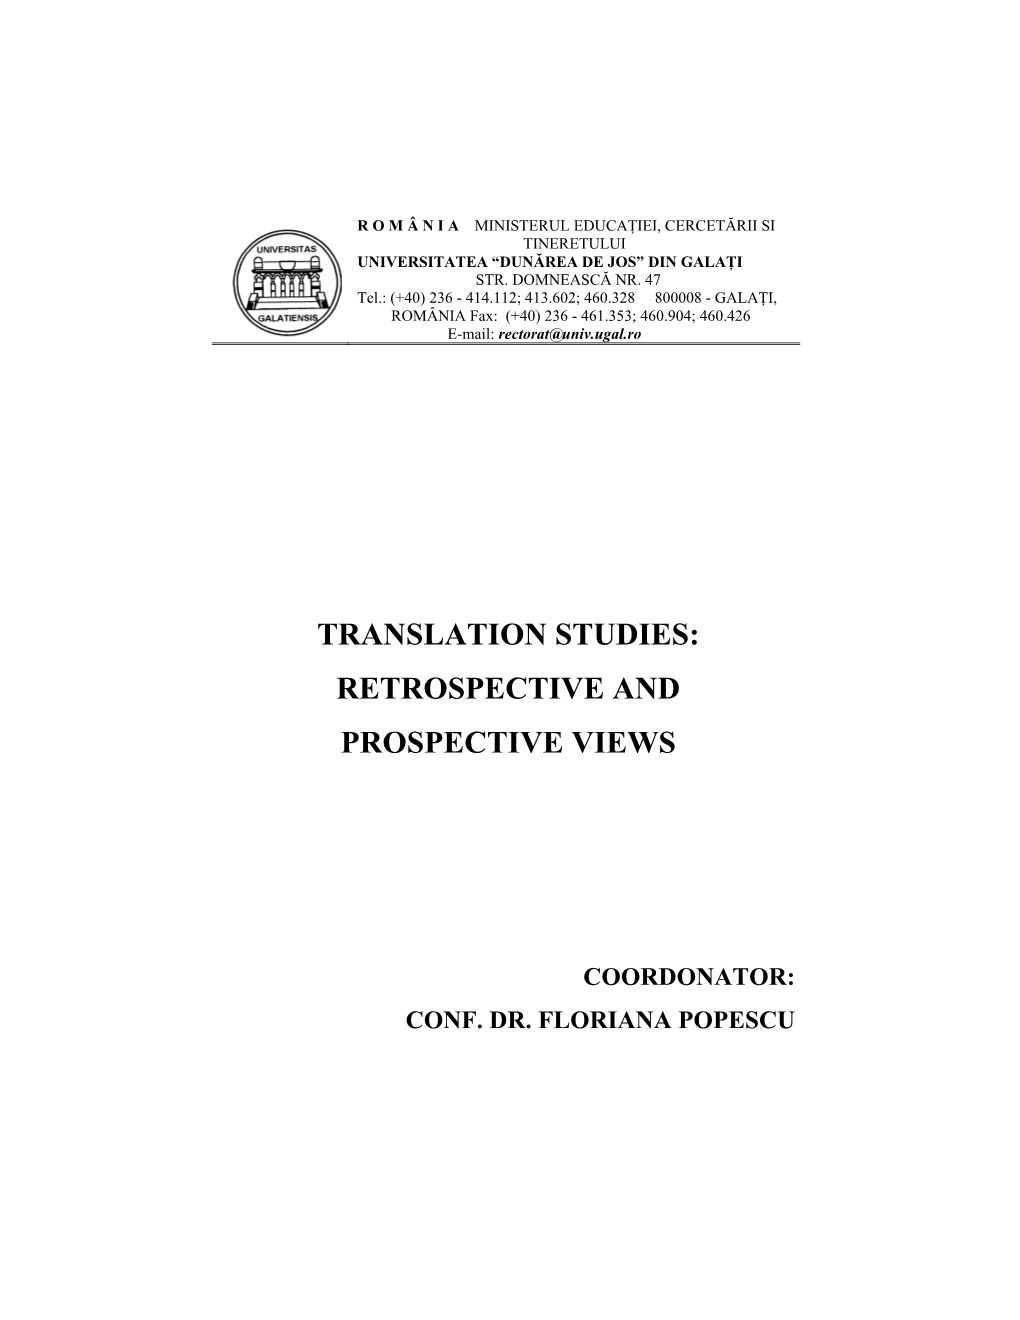 Translation Studies: Retrospective and Prospective Views